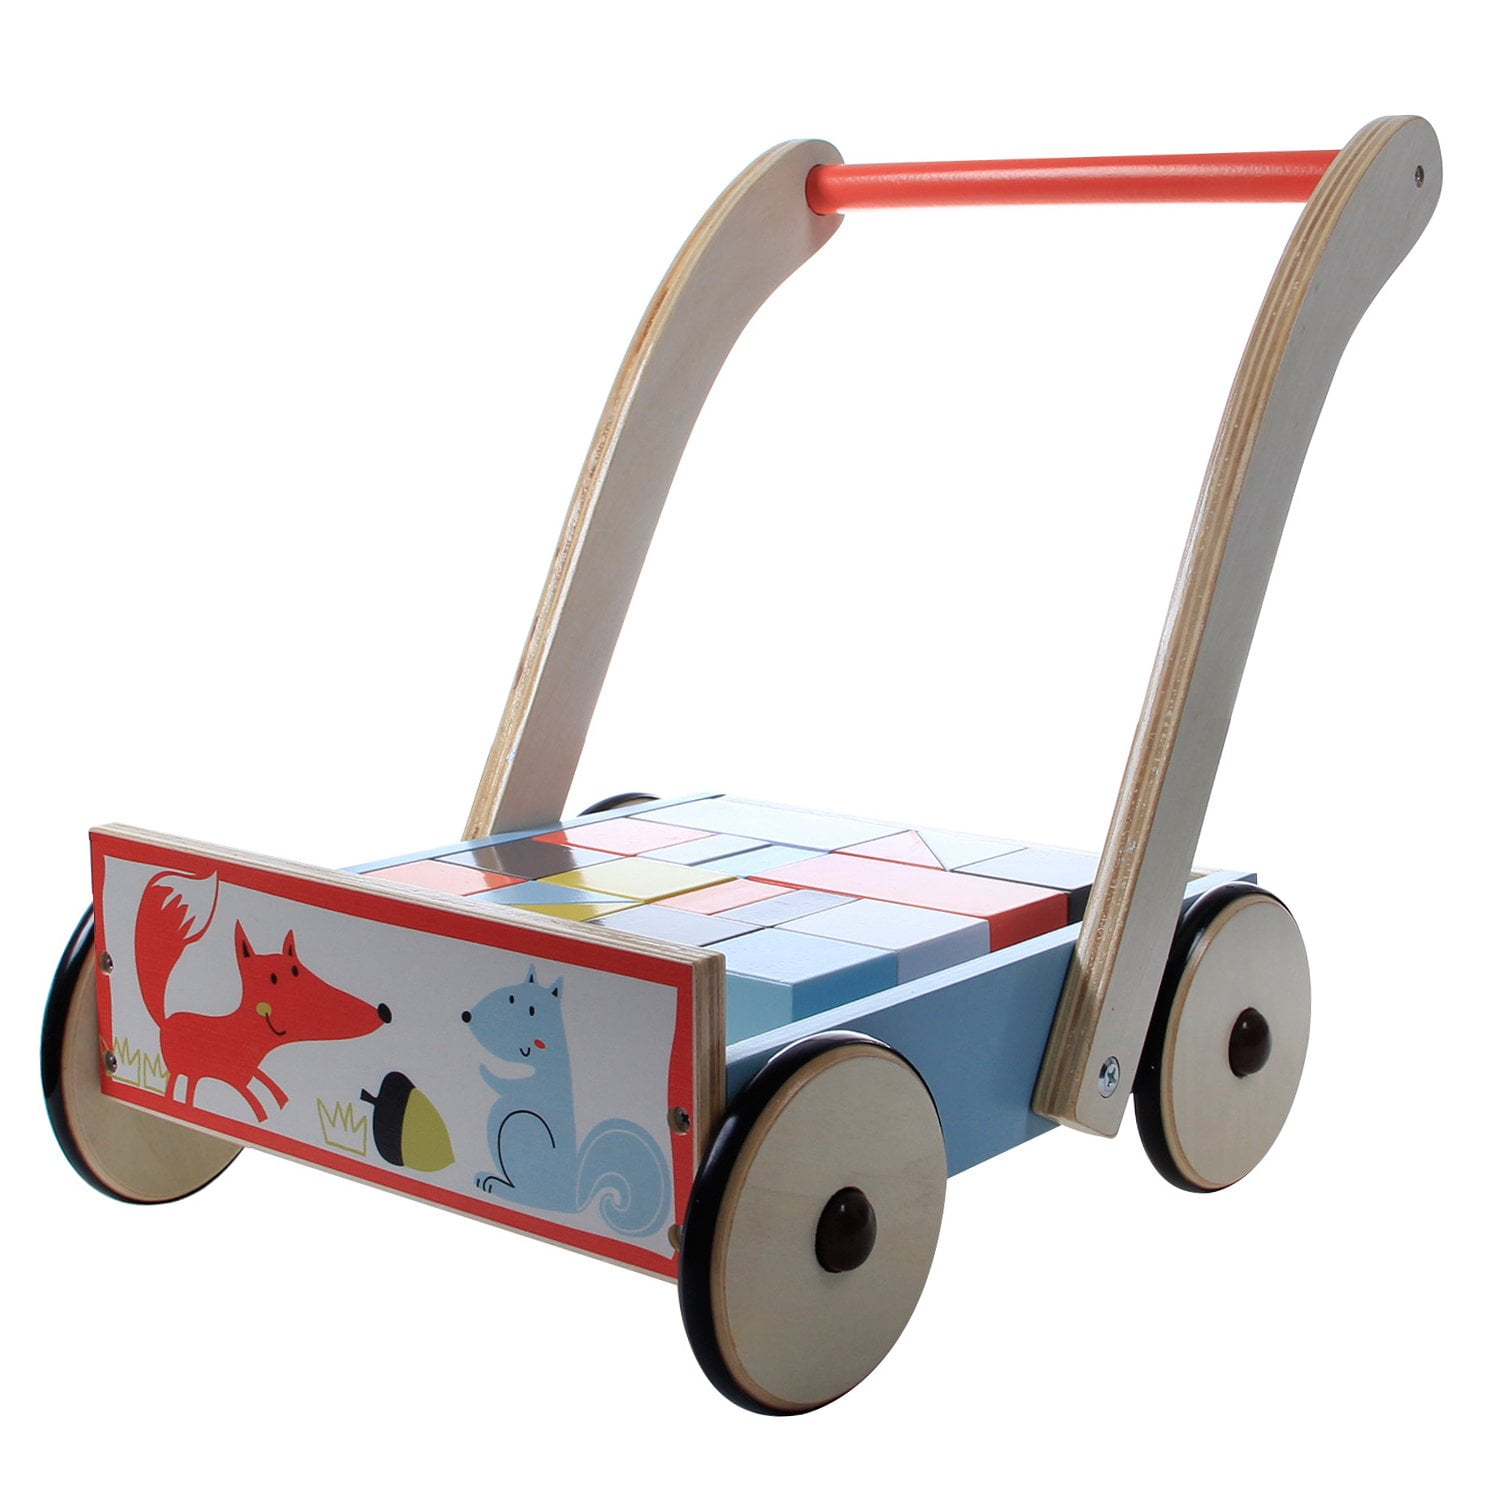 3 wheel wooden walker for babies